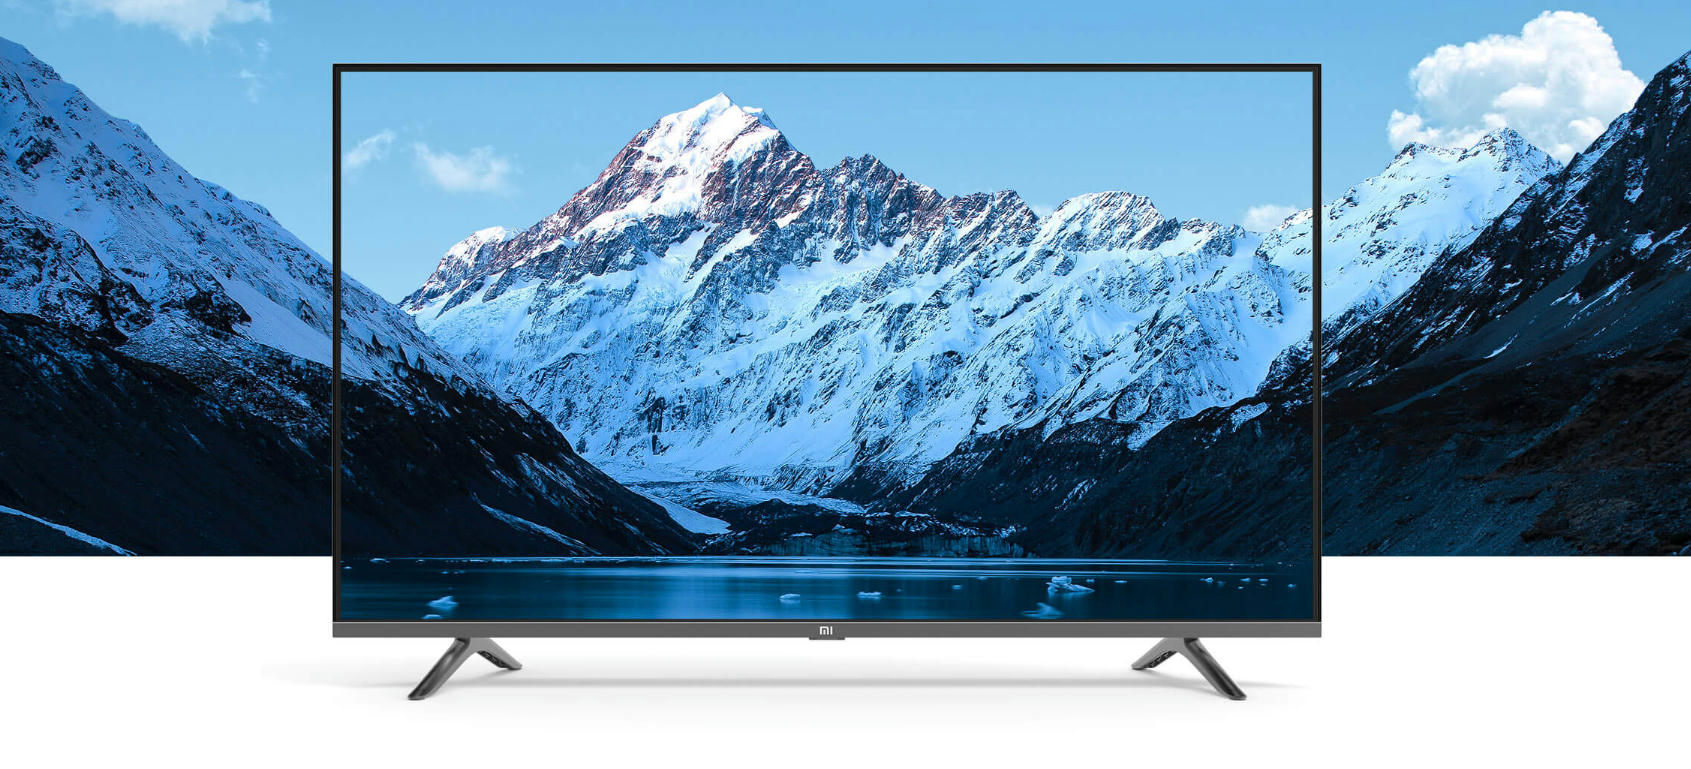 Хороший телевизор 32 диагональ. Телевизор хиаоми 43 дюйма смарт. Телевизор Xiaomi 32 дюйма. Телевизор Xiaomi Smart TV 32. Телевизор Xiaomi 32 смарт ТВ.